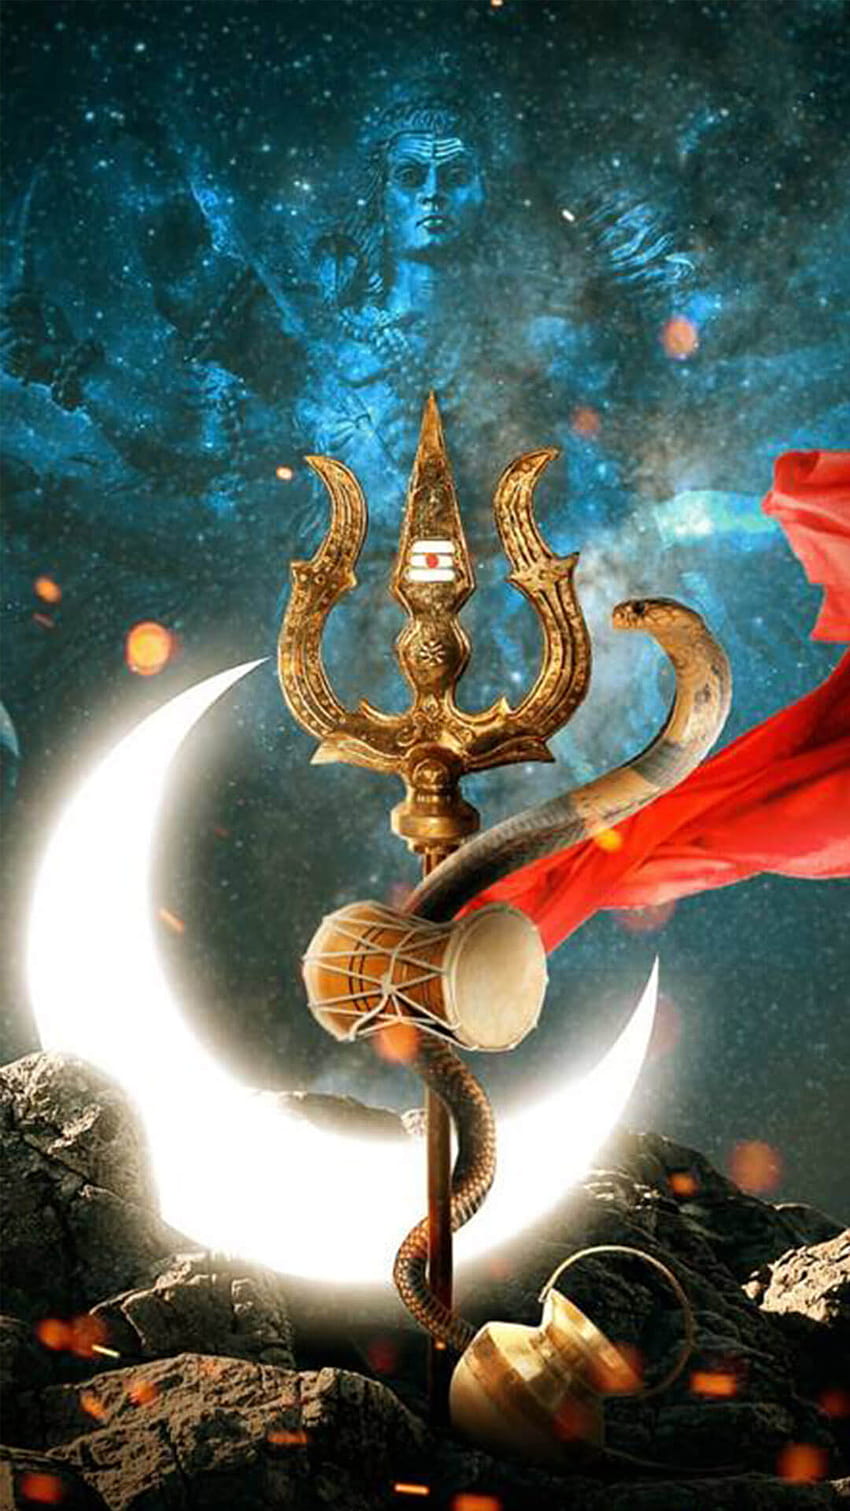 Lord Shiva and Spirituality